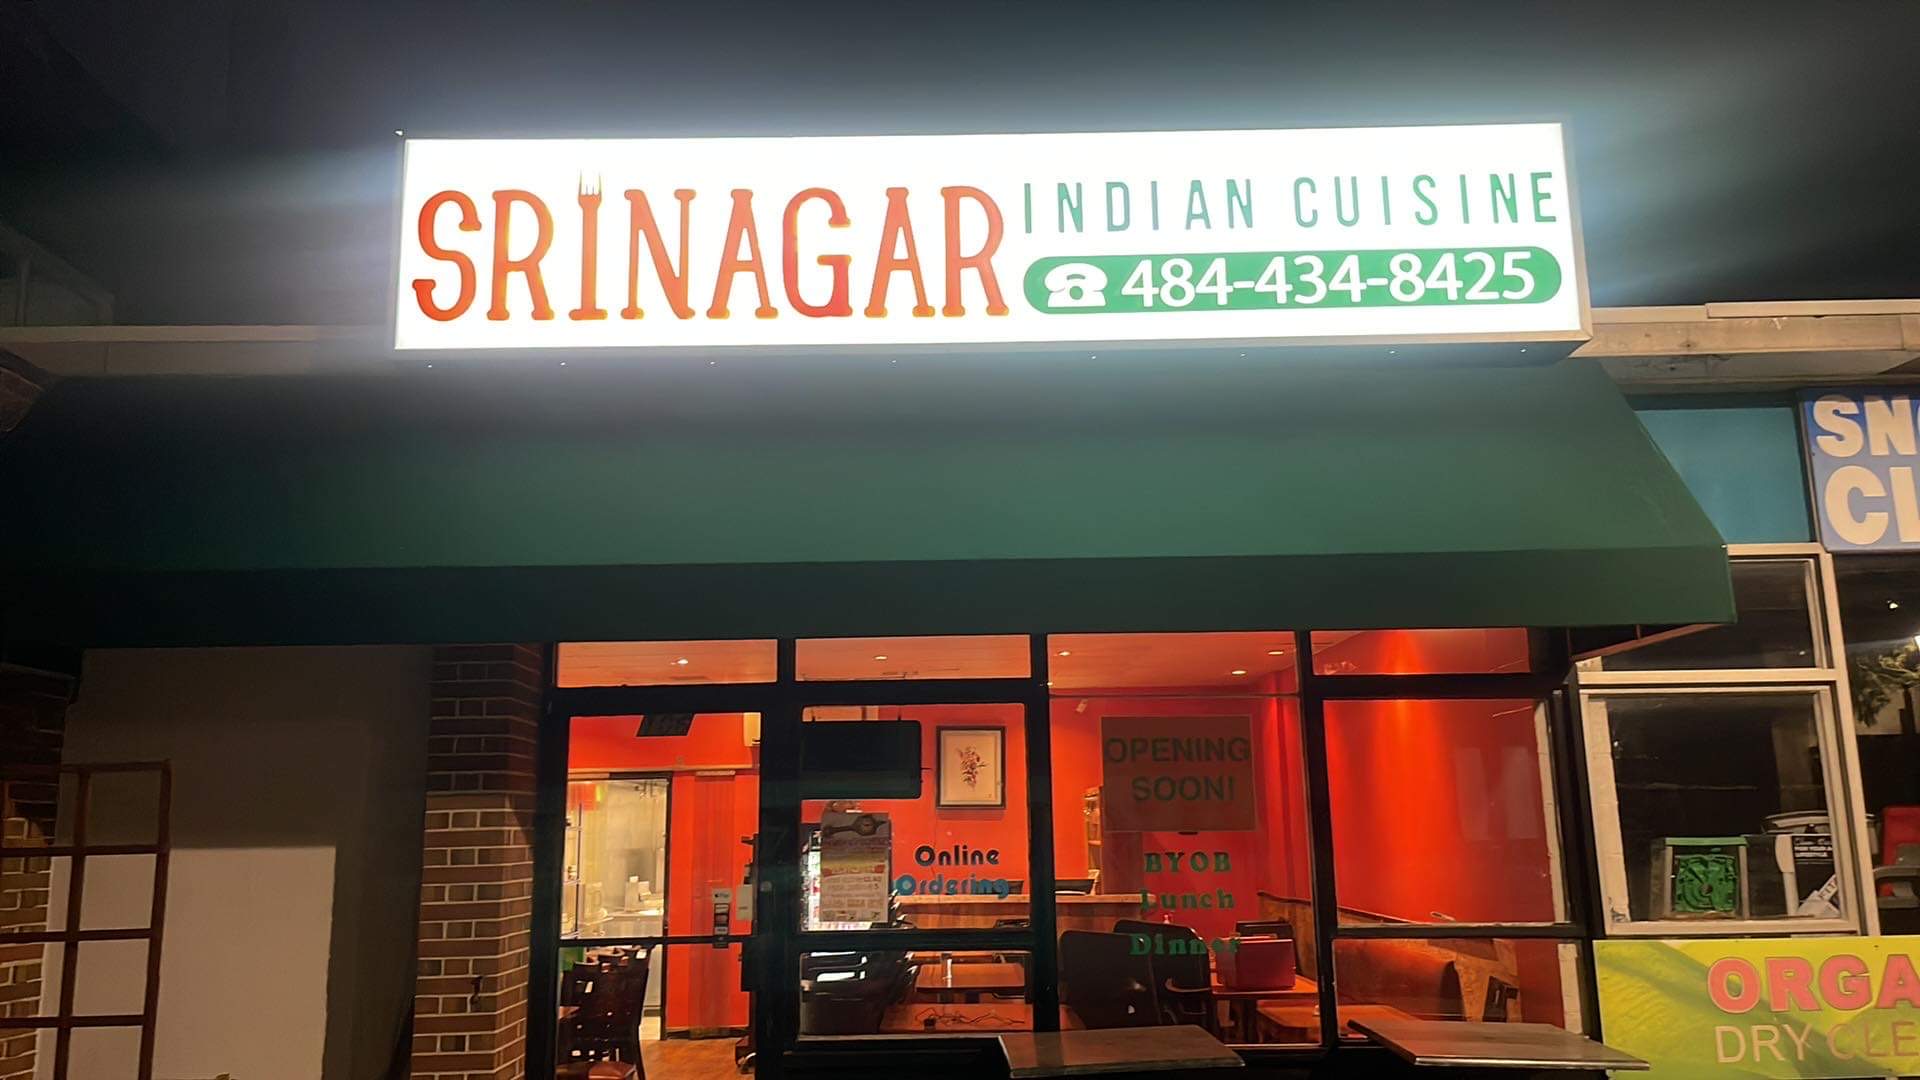 Srinagar Indian Cuisine